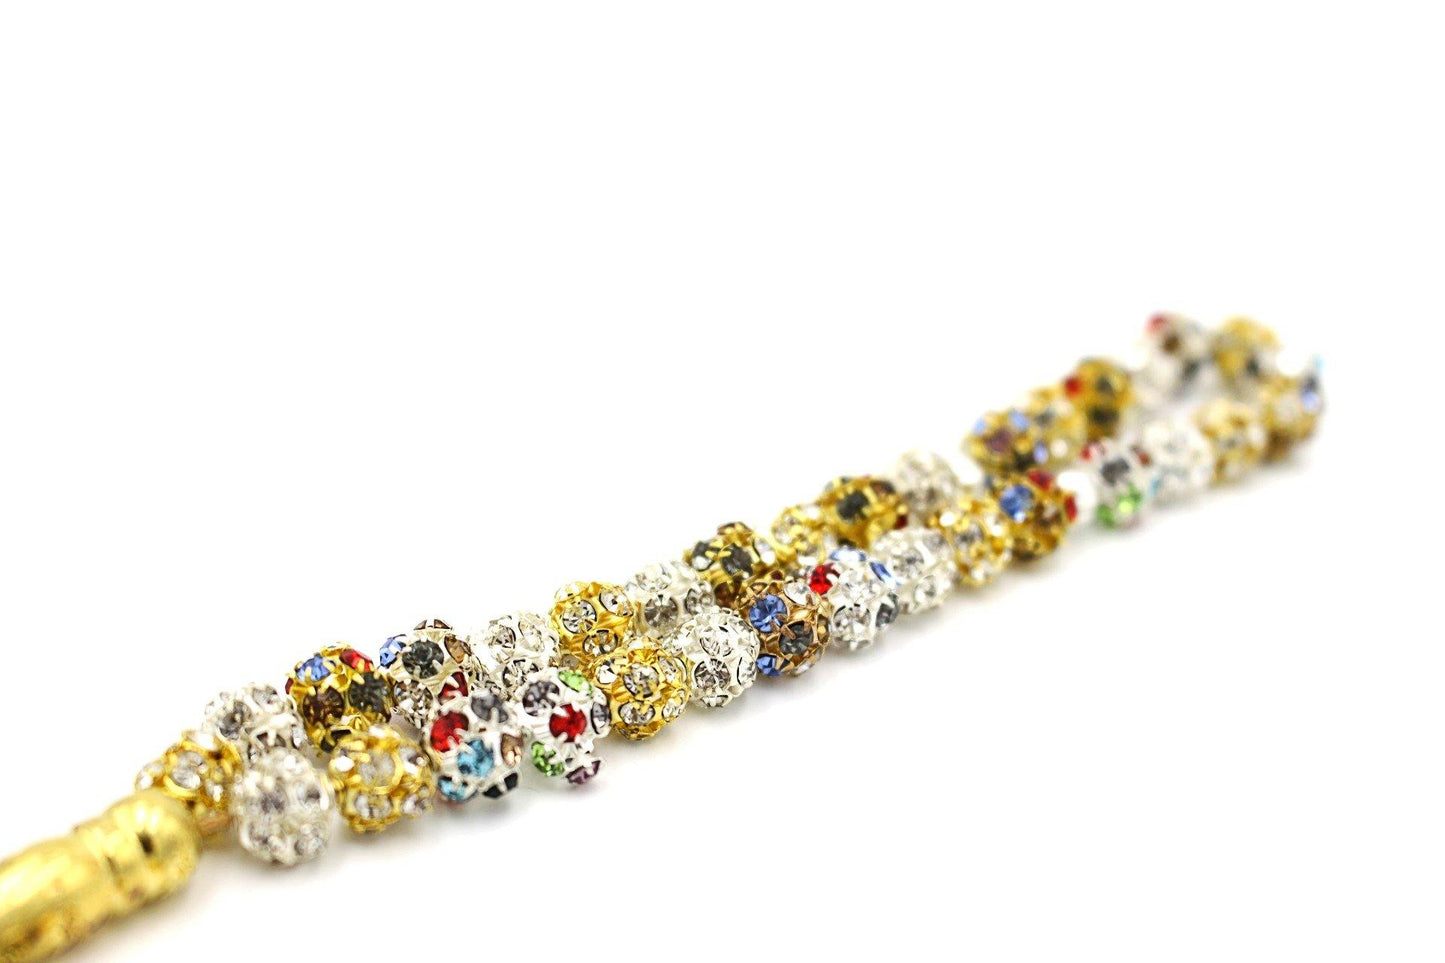 crystals gemstones tesbih prayer beads zircon luxury designs bespoke jewellery 